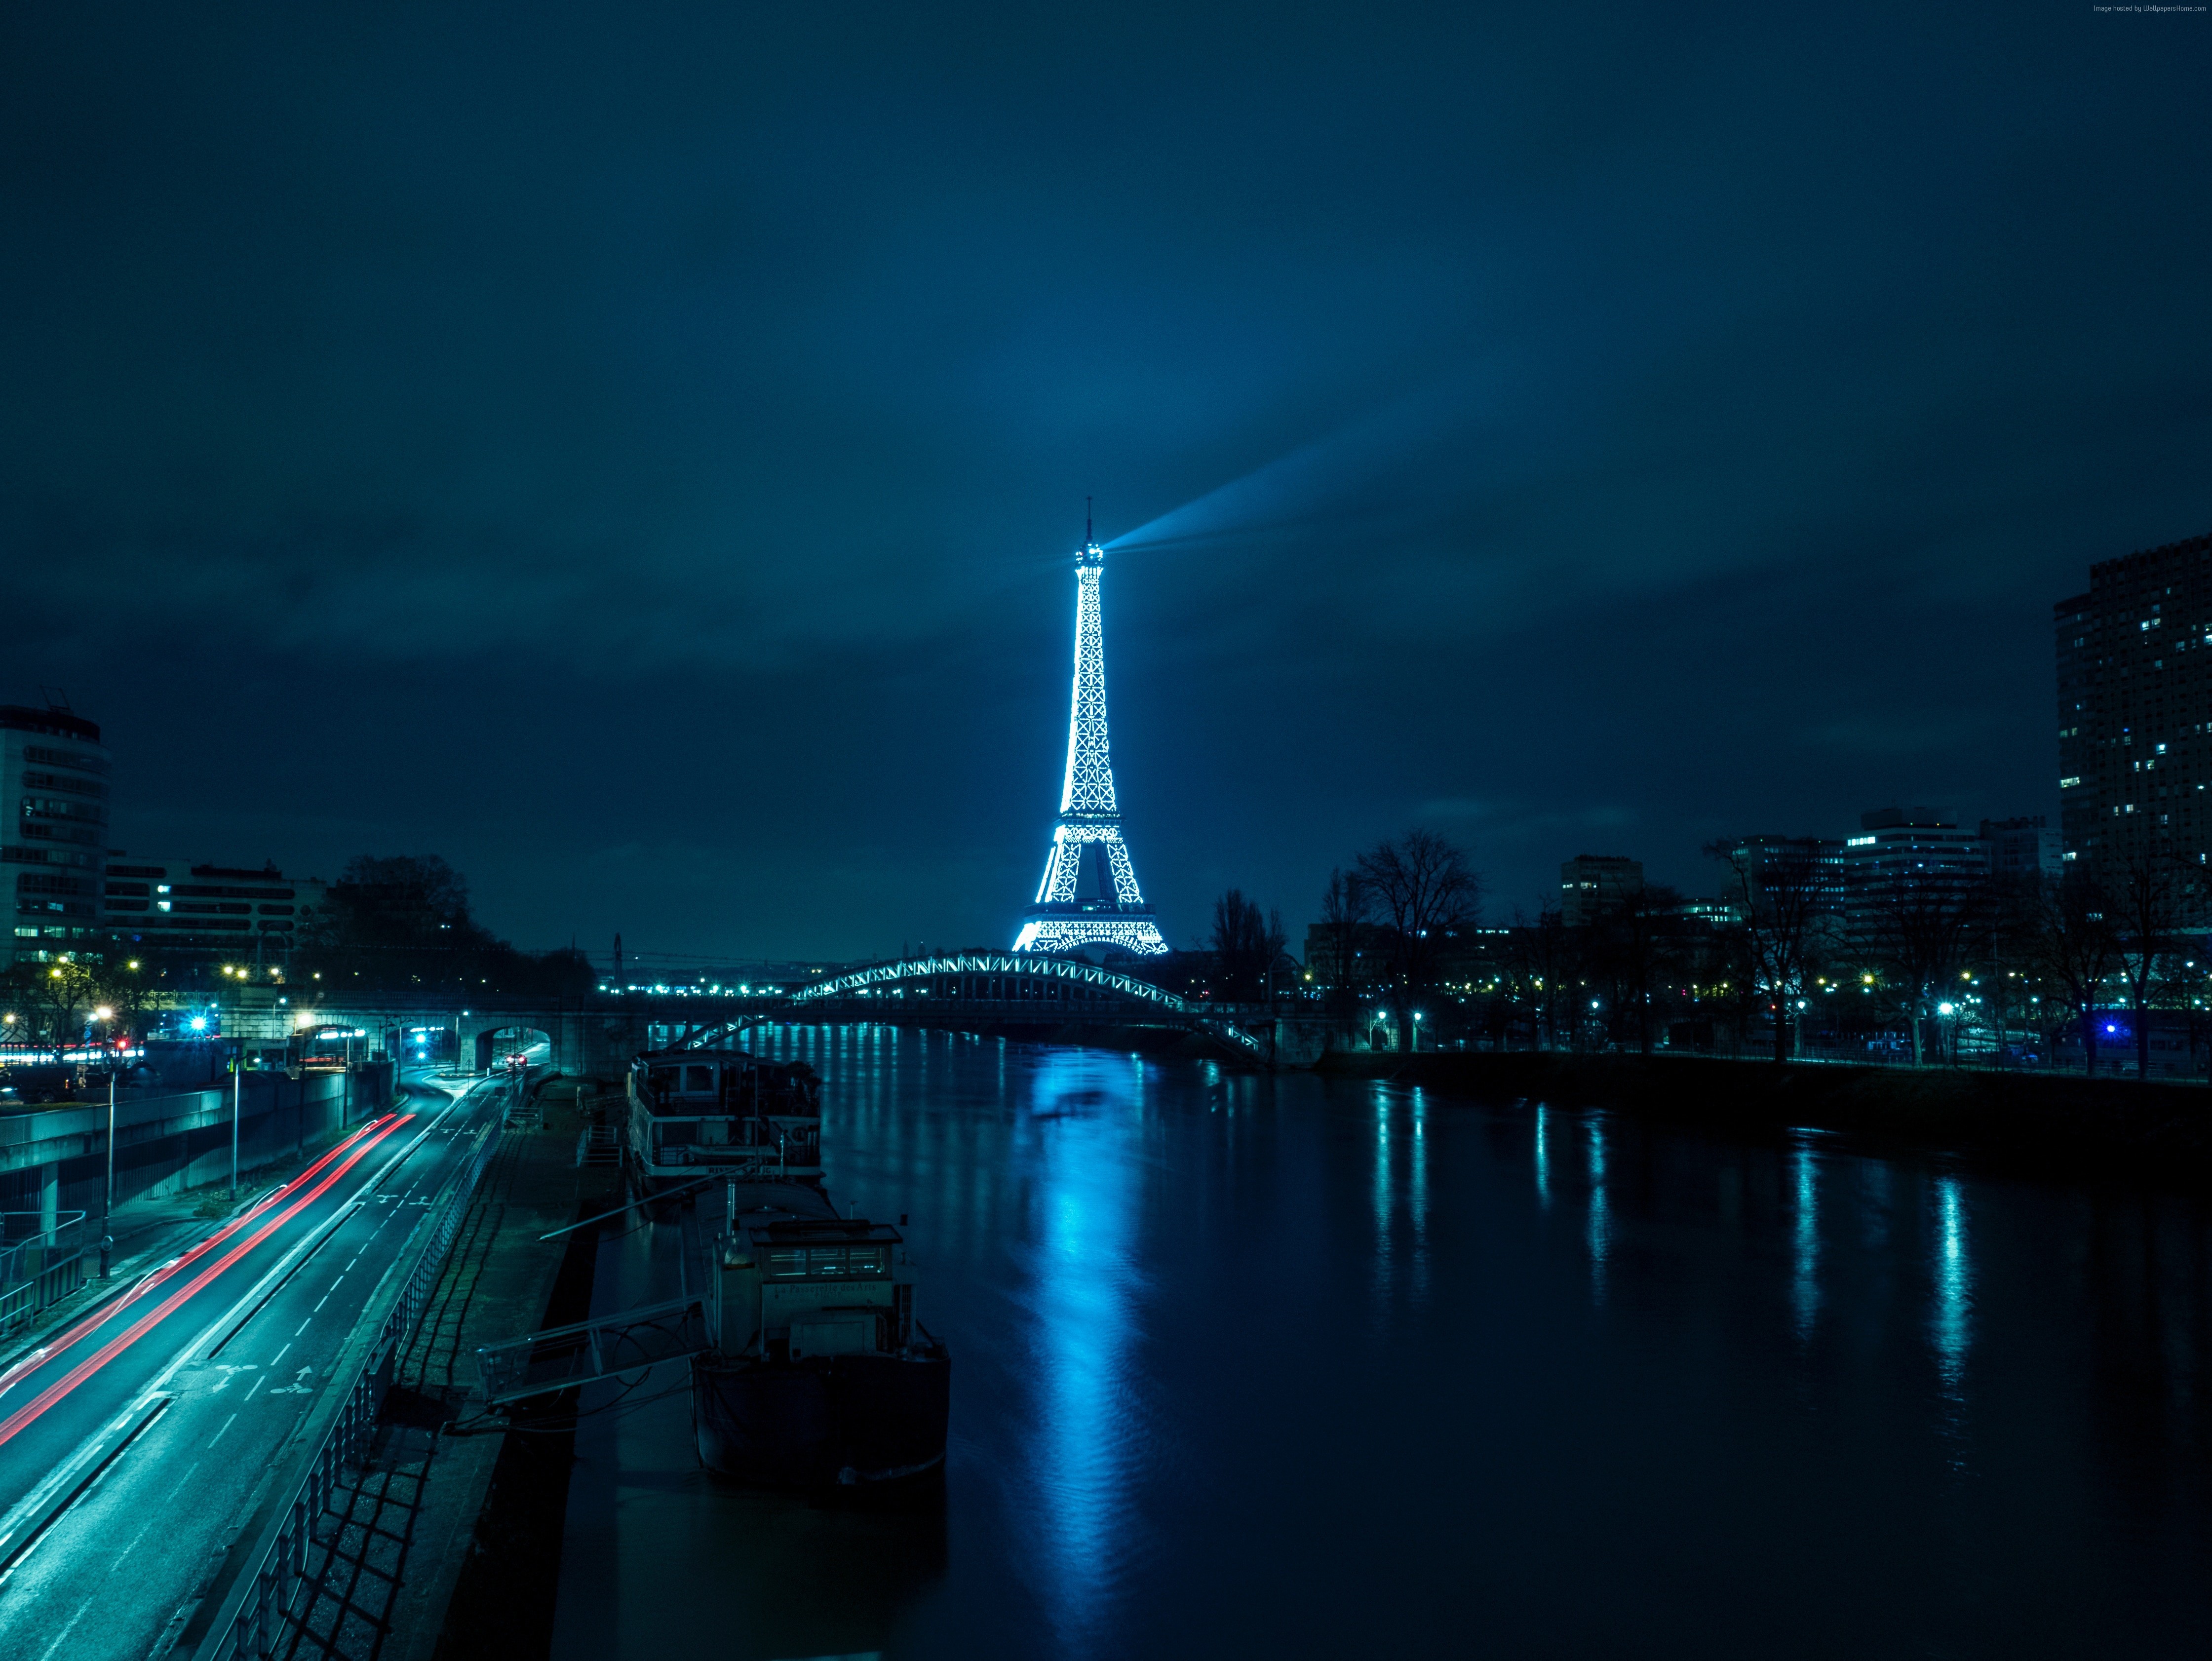 Eiffel Tower Light Show at Night Wallpaper, HD City 4K Wallpapers